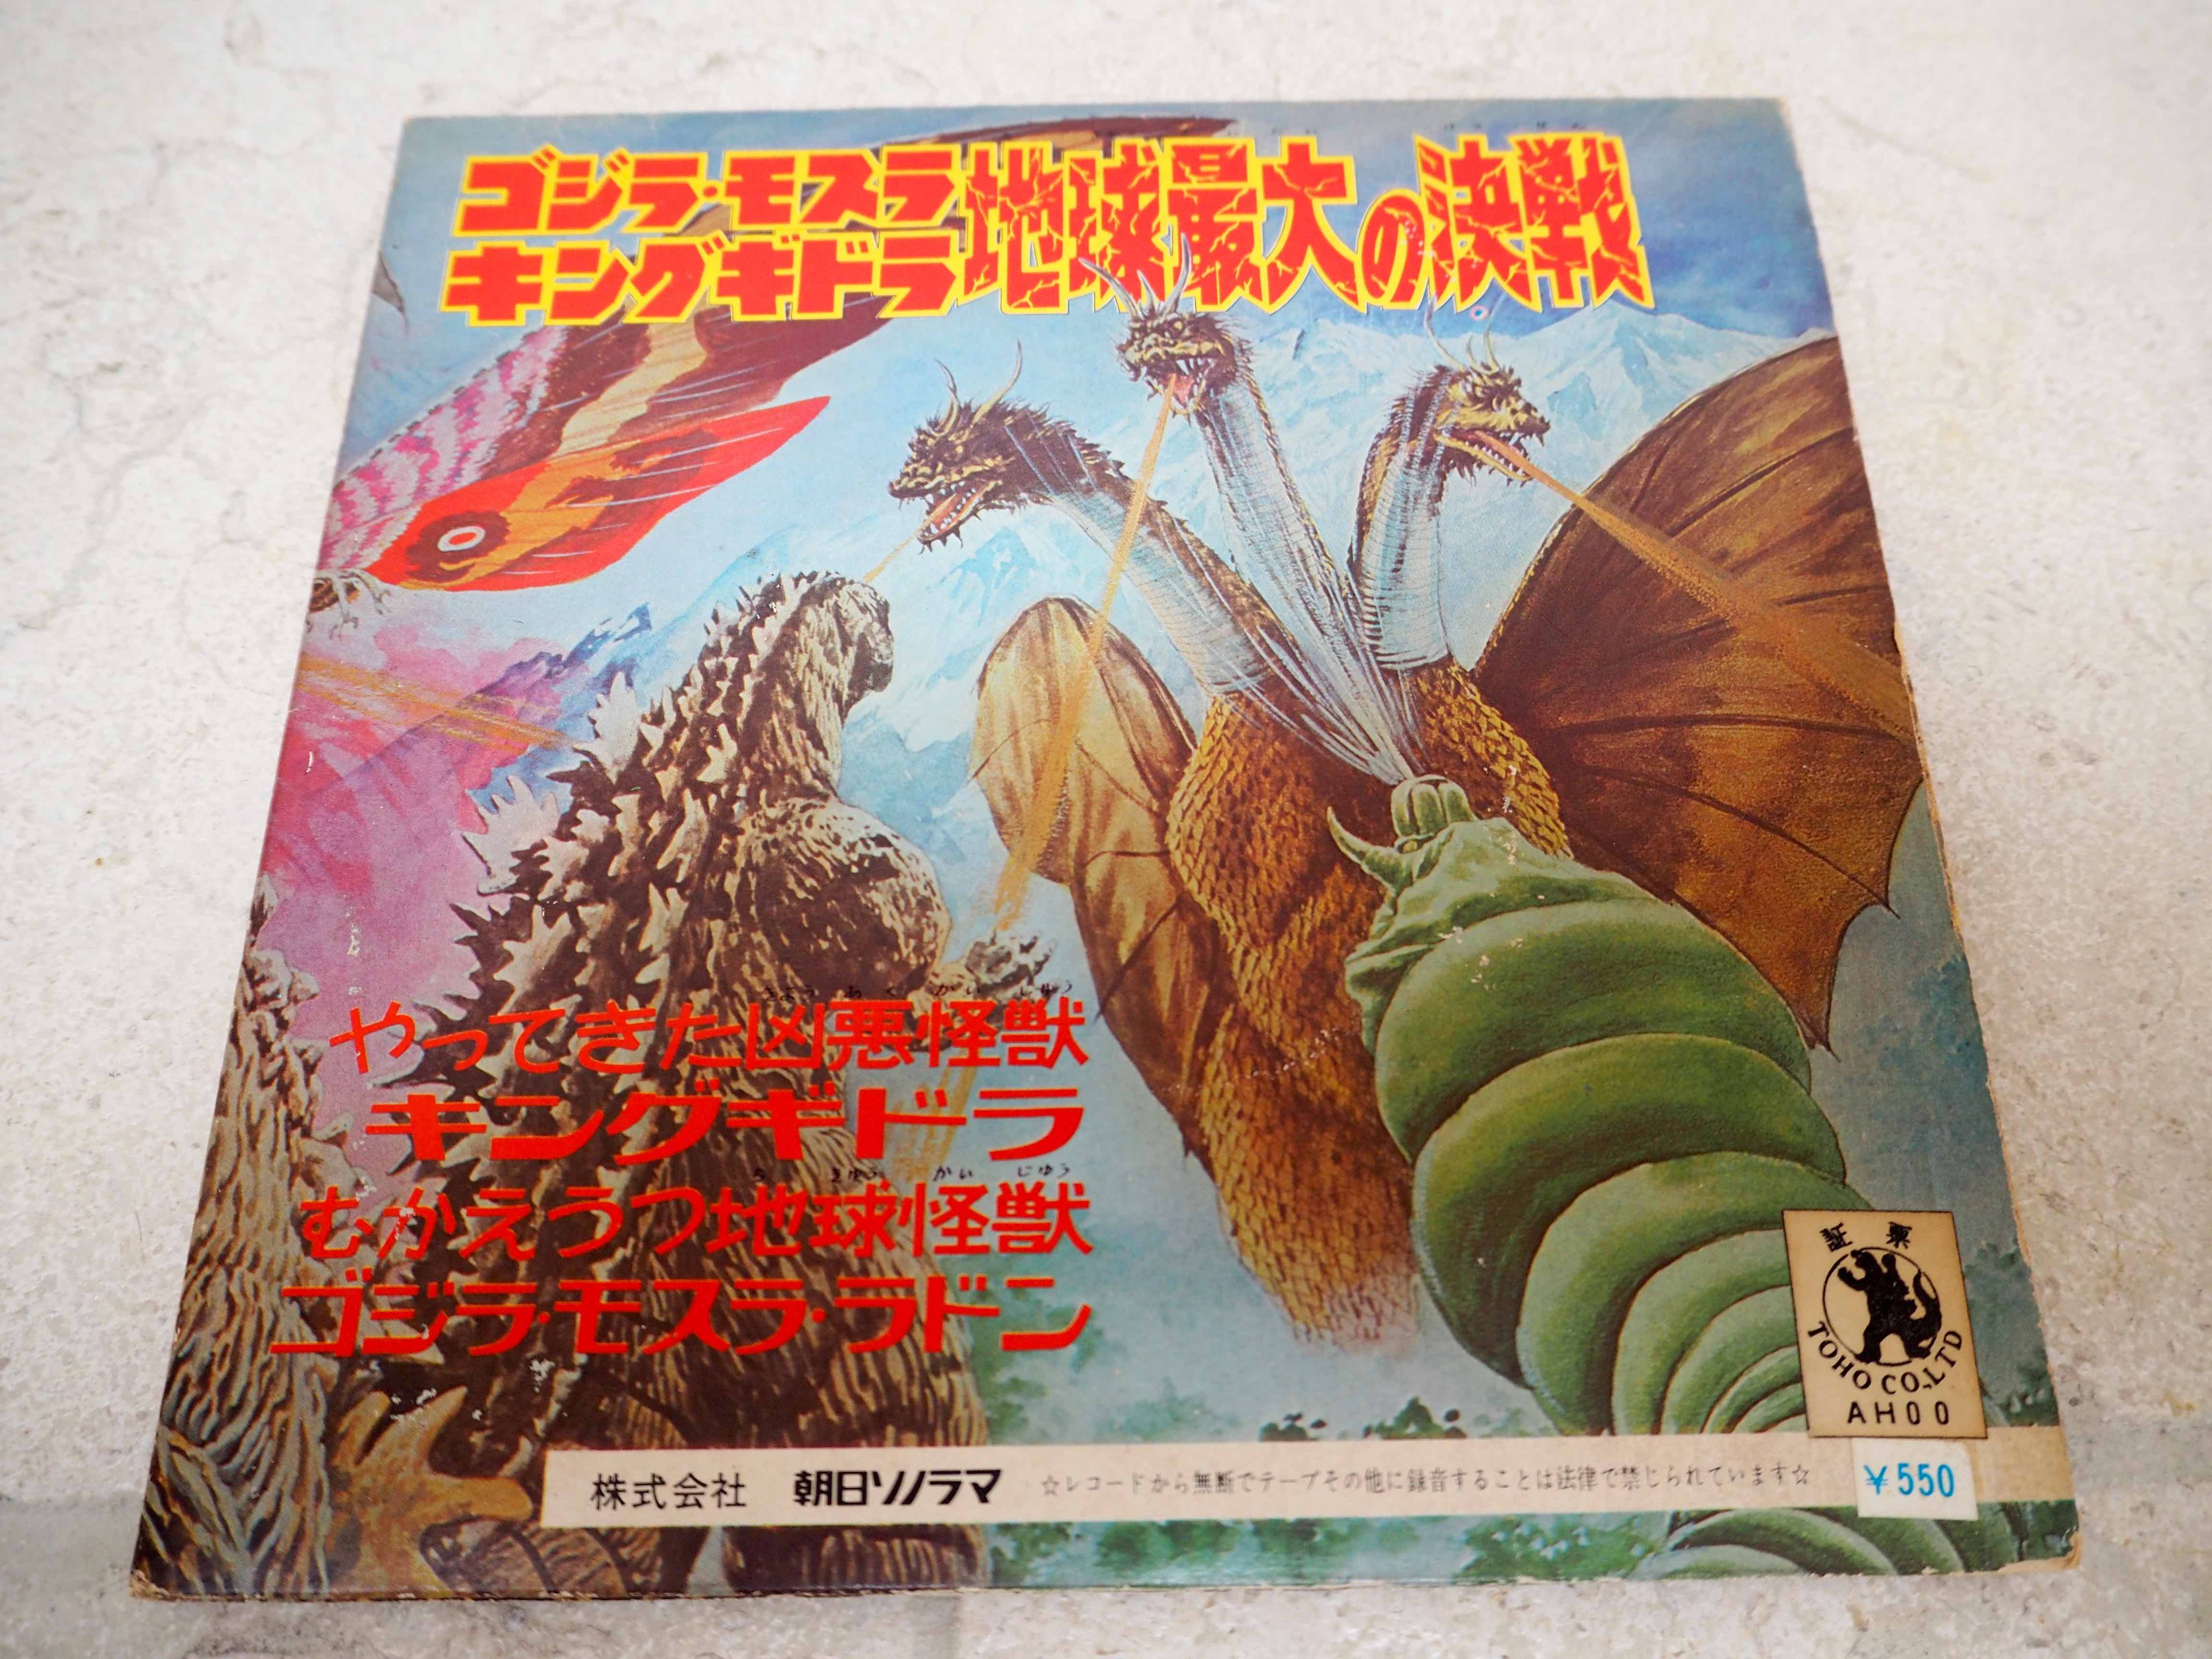 Godzilla single reverse.jpg